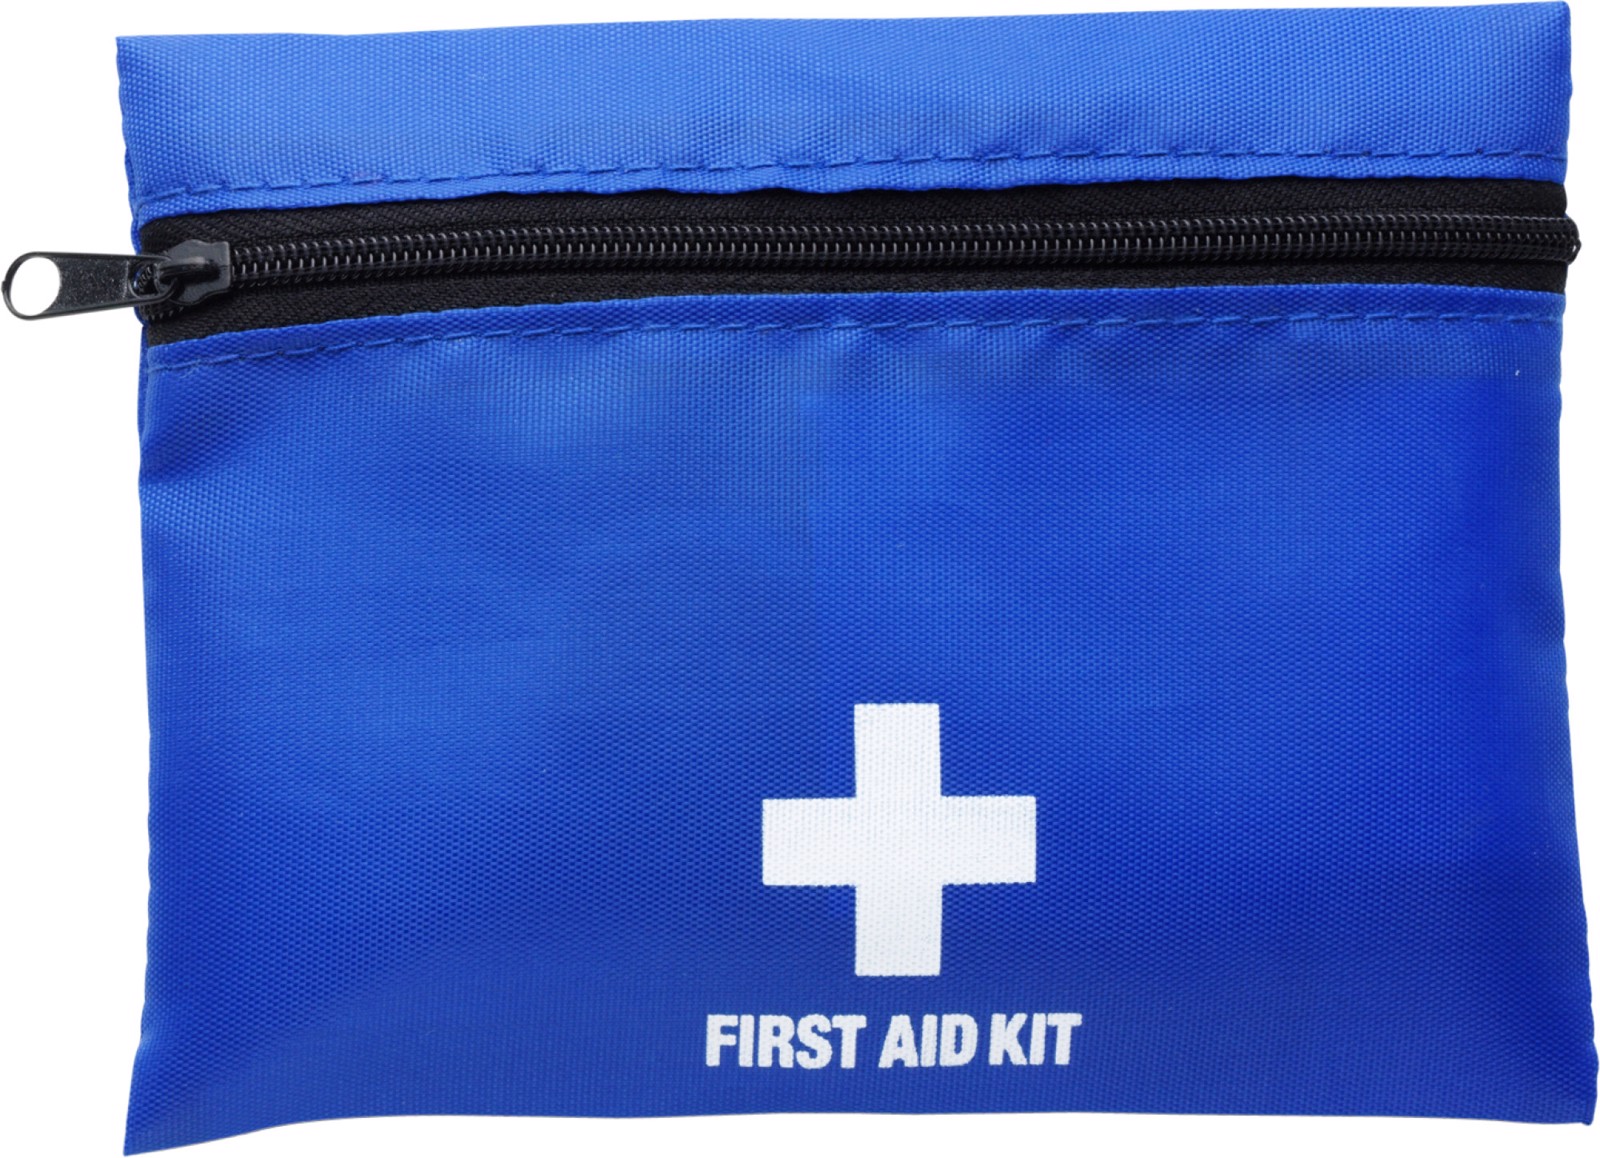 Nylon (210D) first aid kit - Cobalt Blue